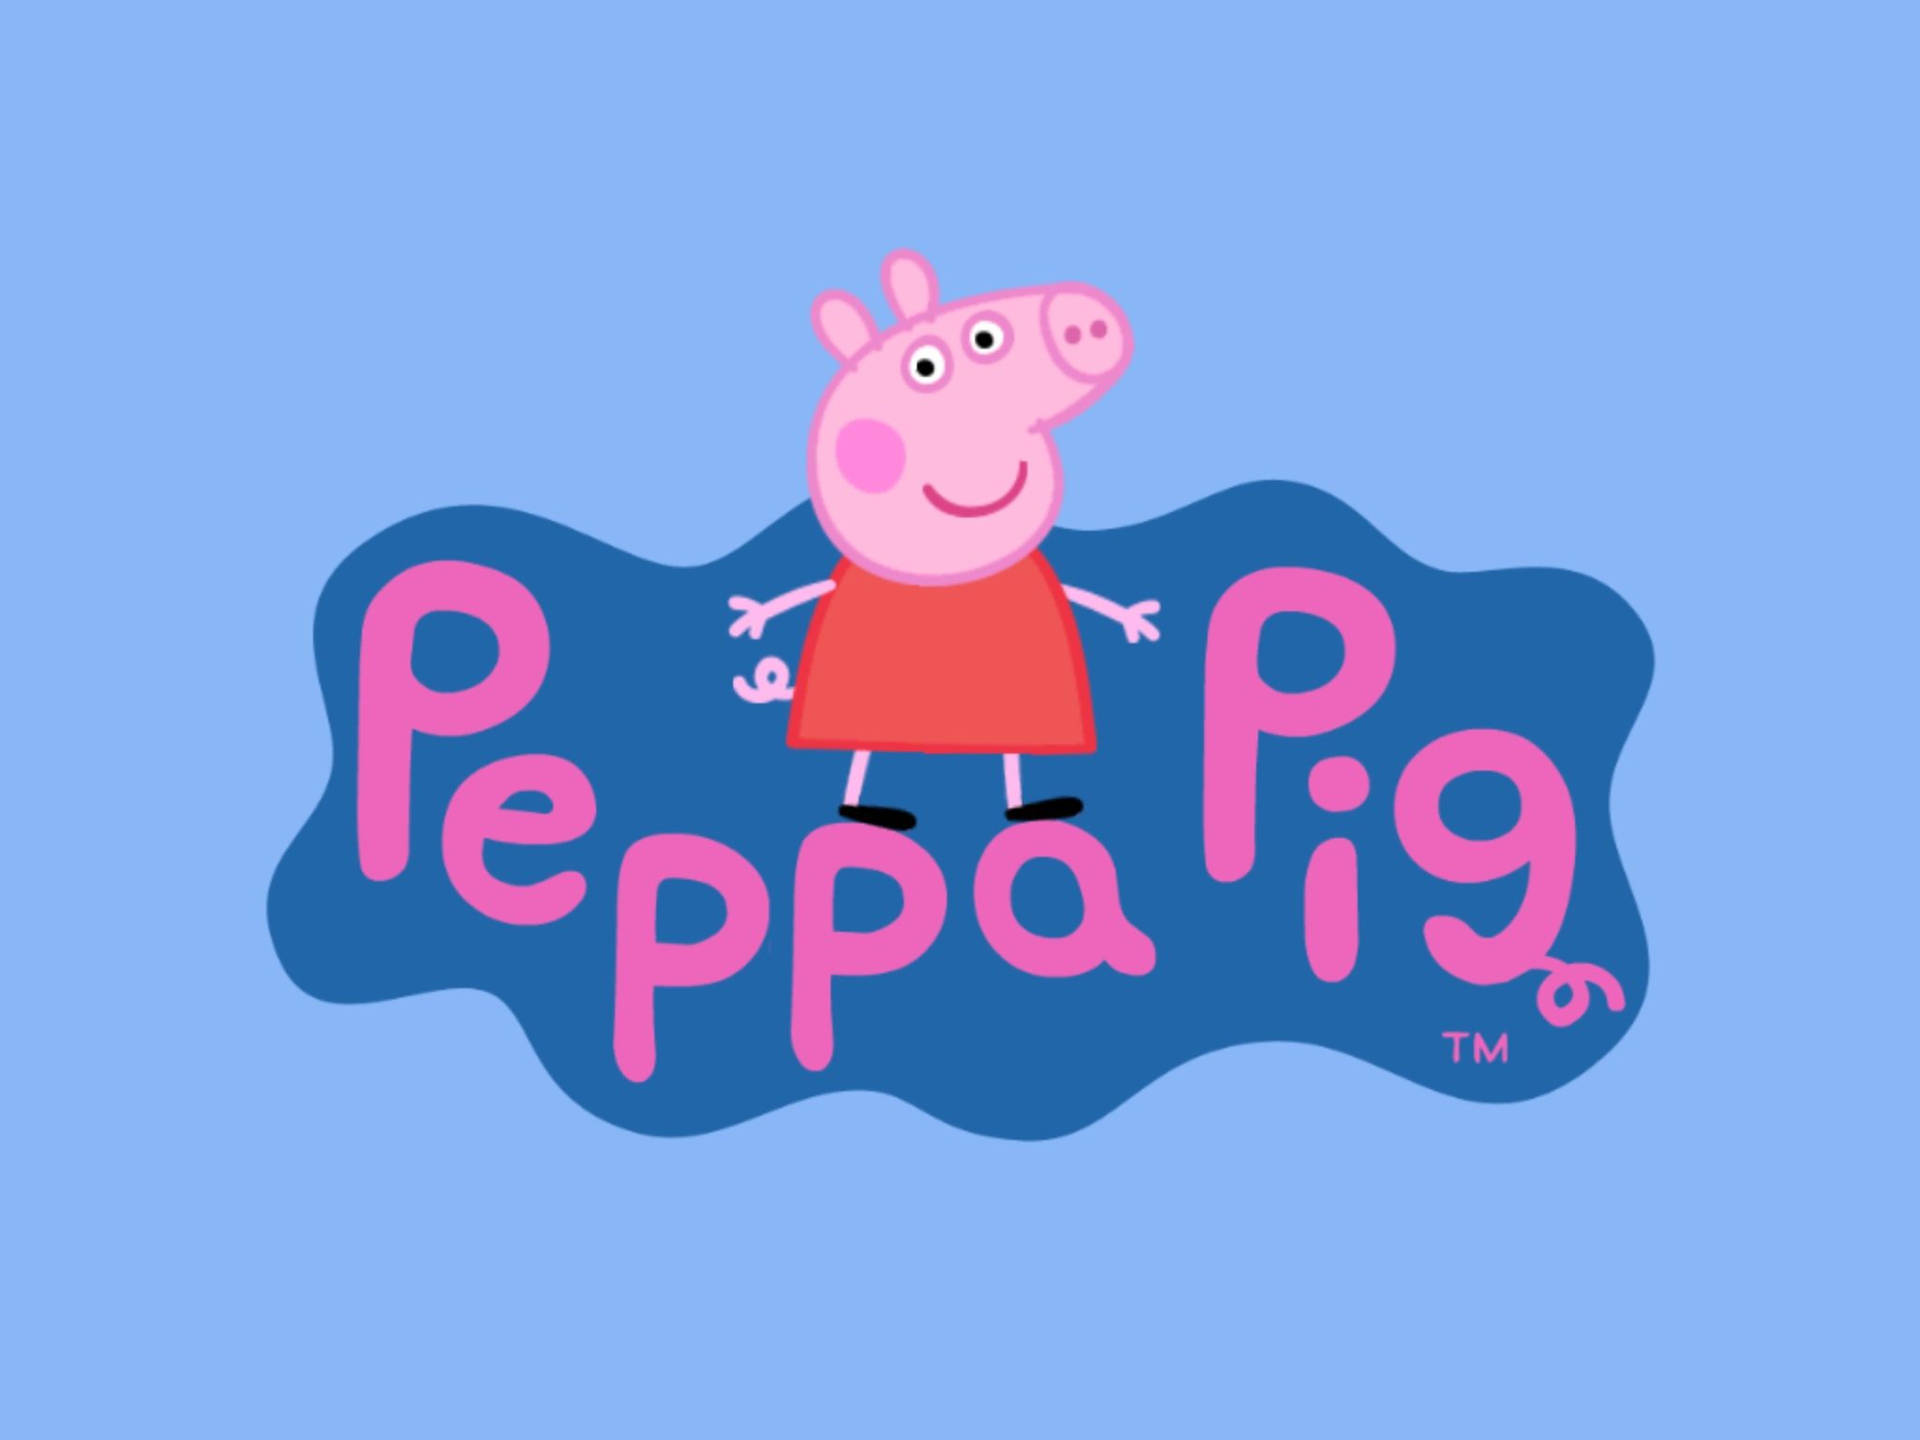 The official Peppa Pig logo. Wallpaper